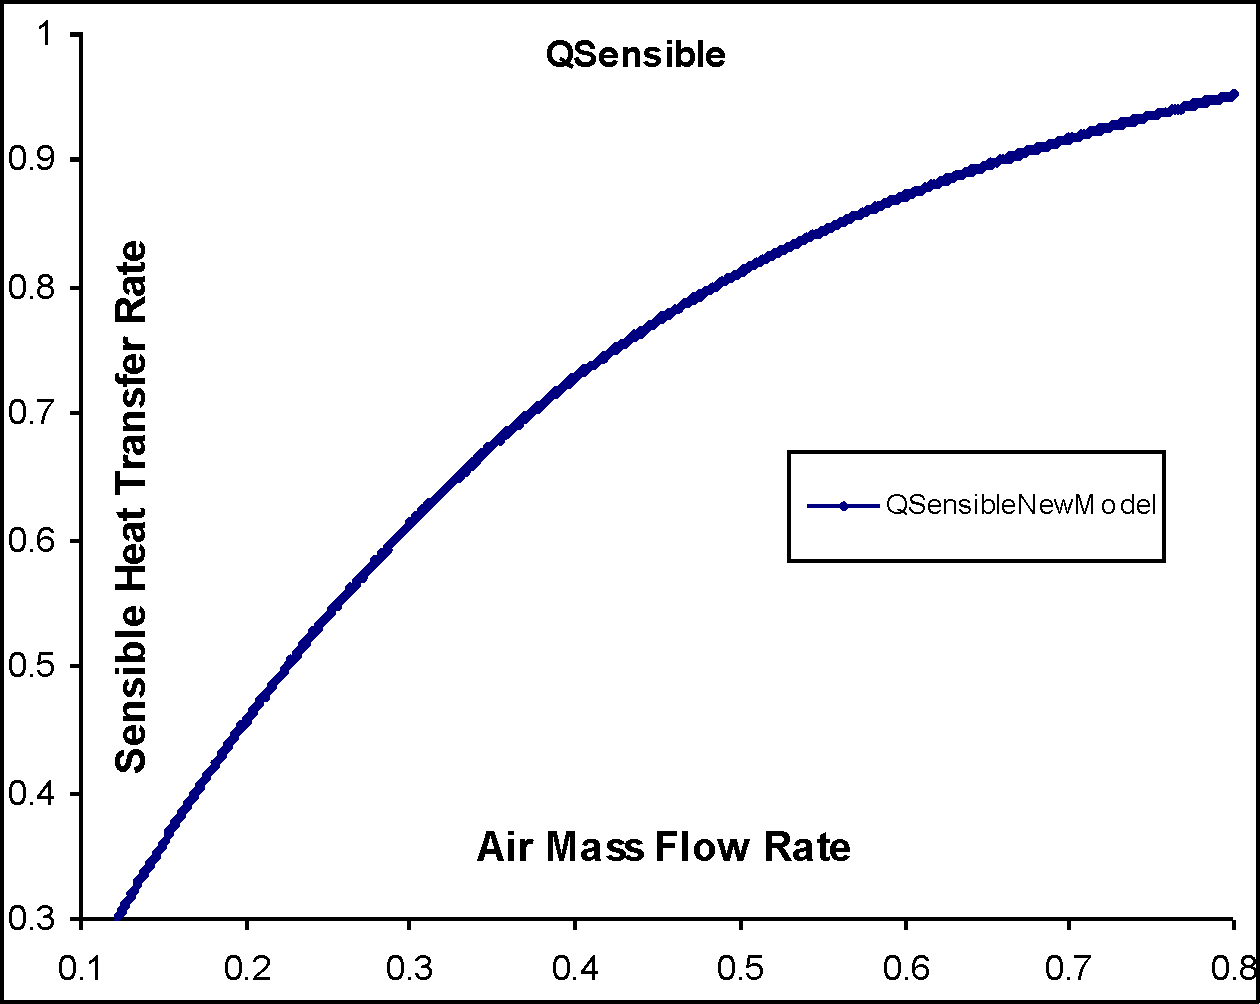 Sensible Load Variations Vs. Air mass Flow Rate